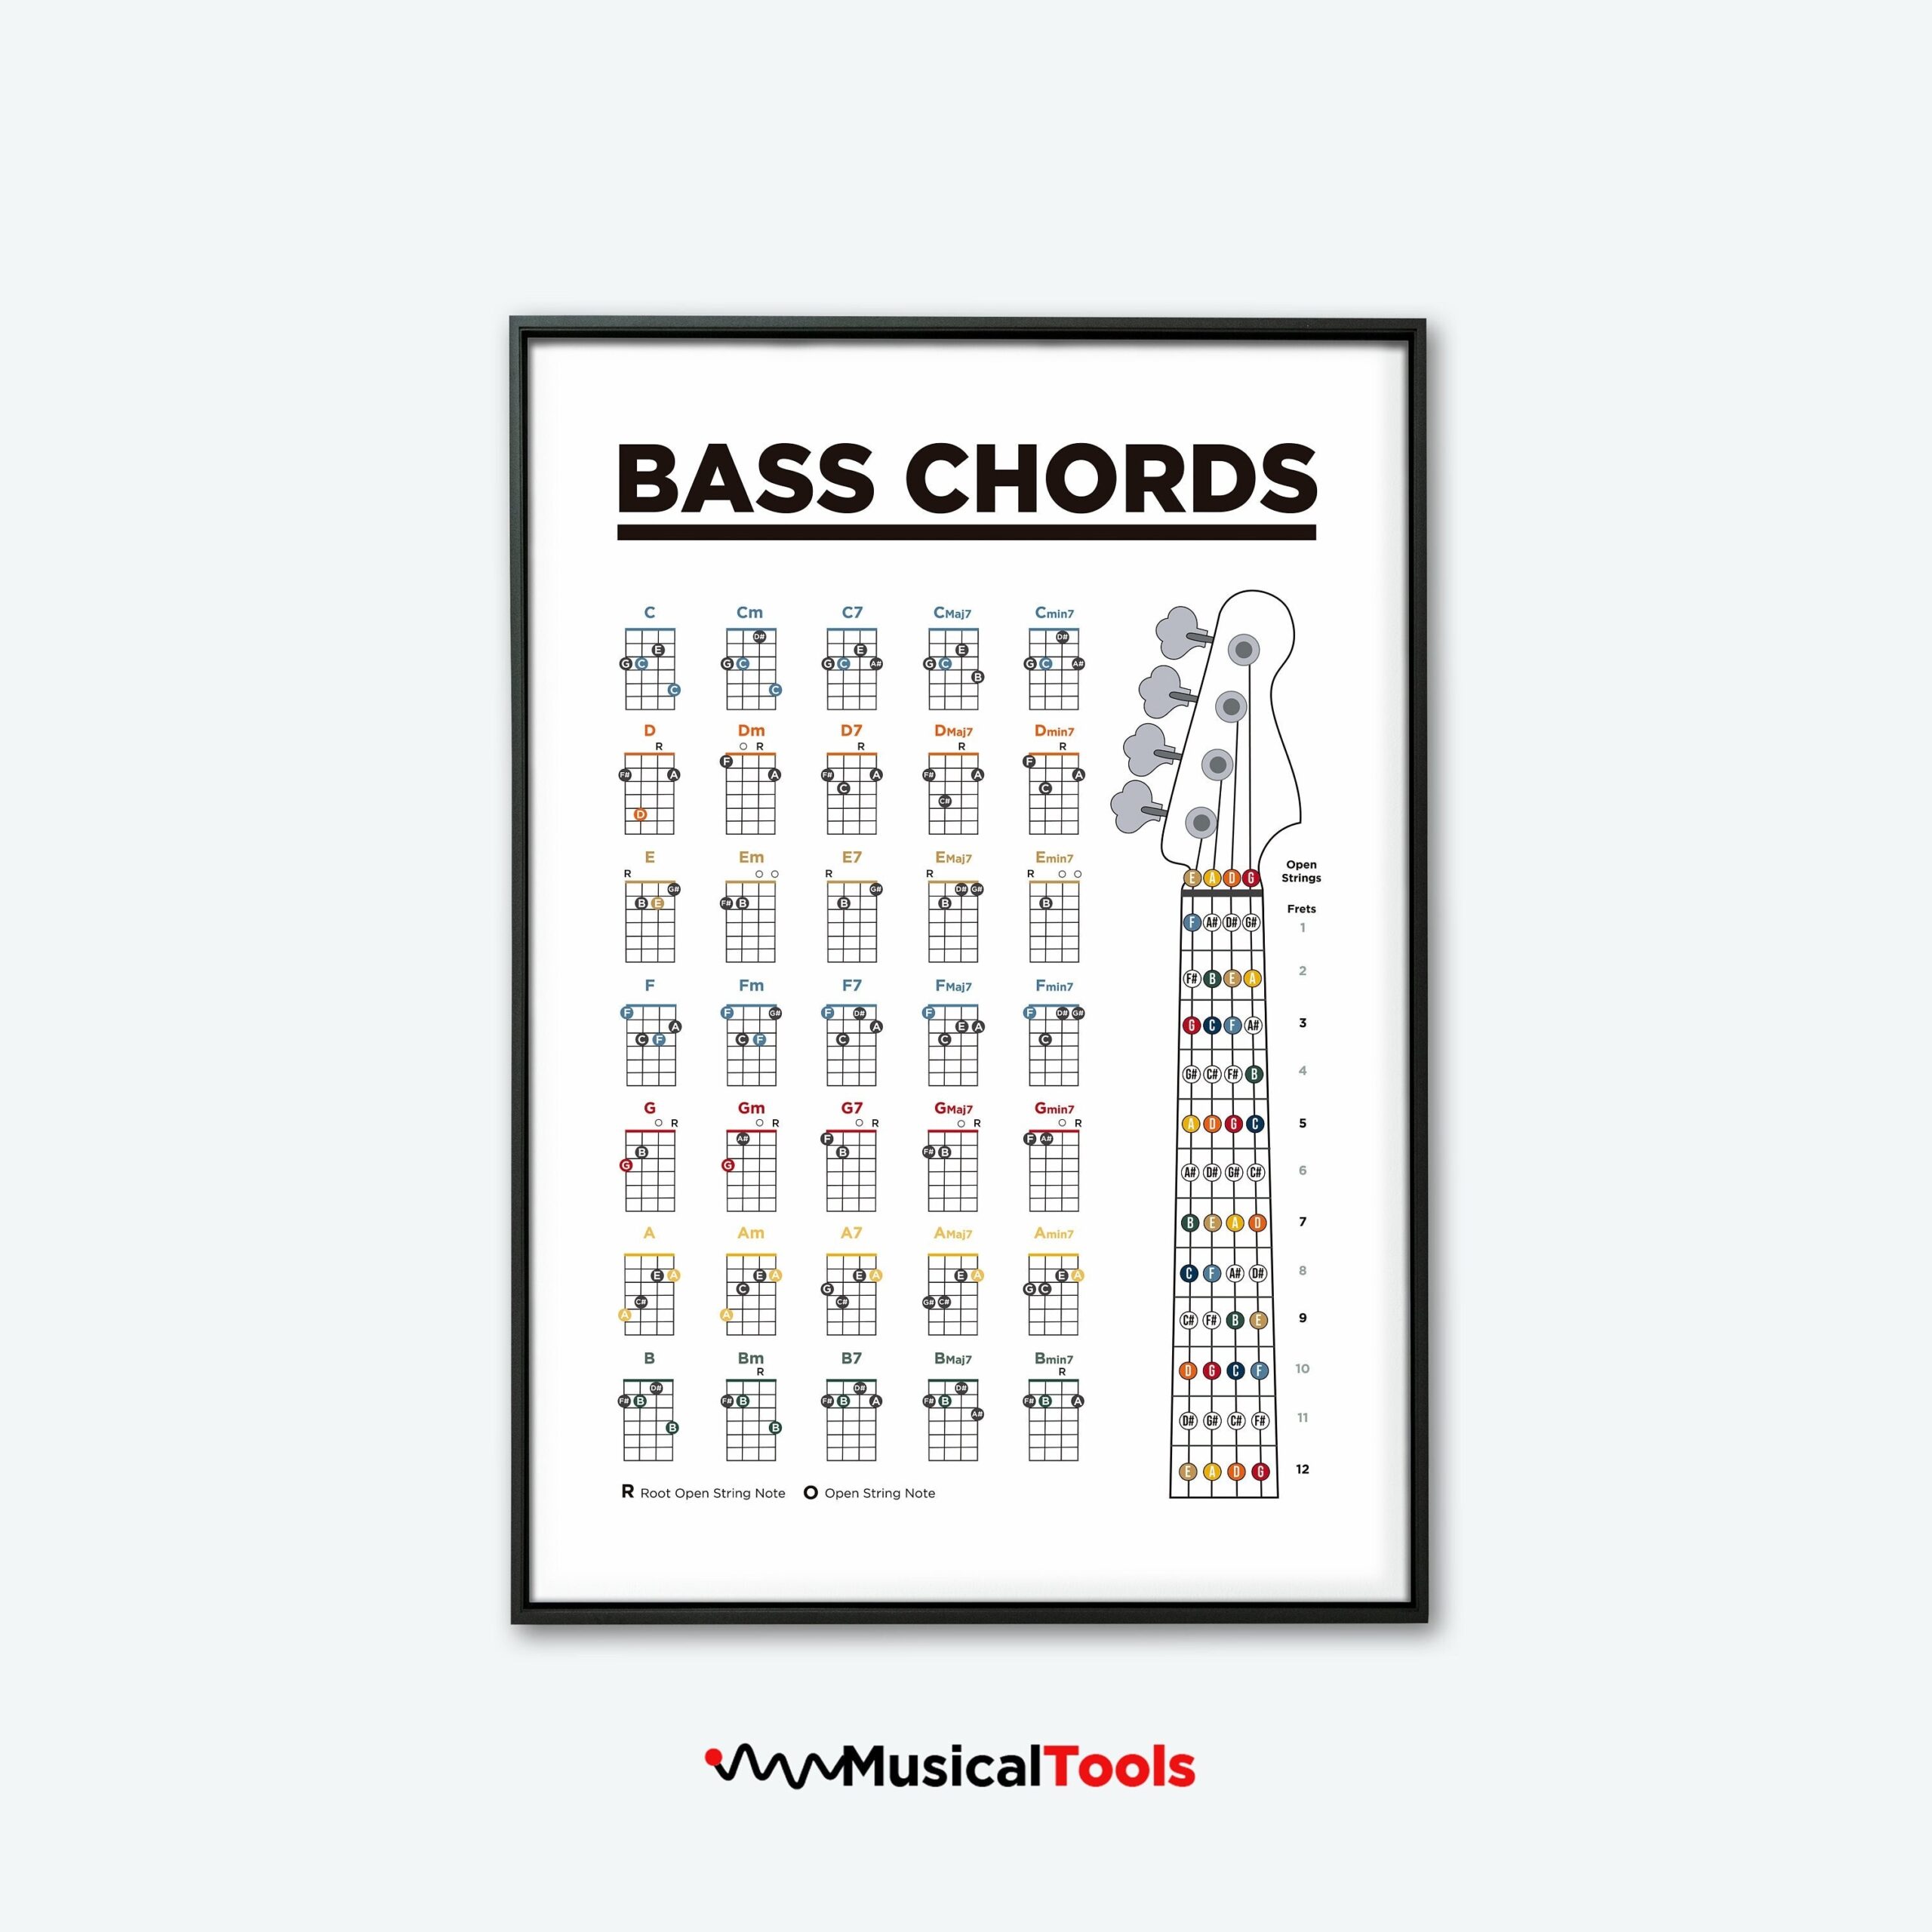 Bass Guitar Chords Chart Printable Poster Learn Bass Guitar Bass Chords Poster Printable Music Theory Poster Basic Chords Chart Etsy - Free Printable Bass Guitar Chord Chart